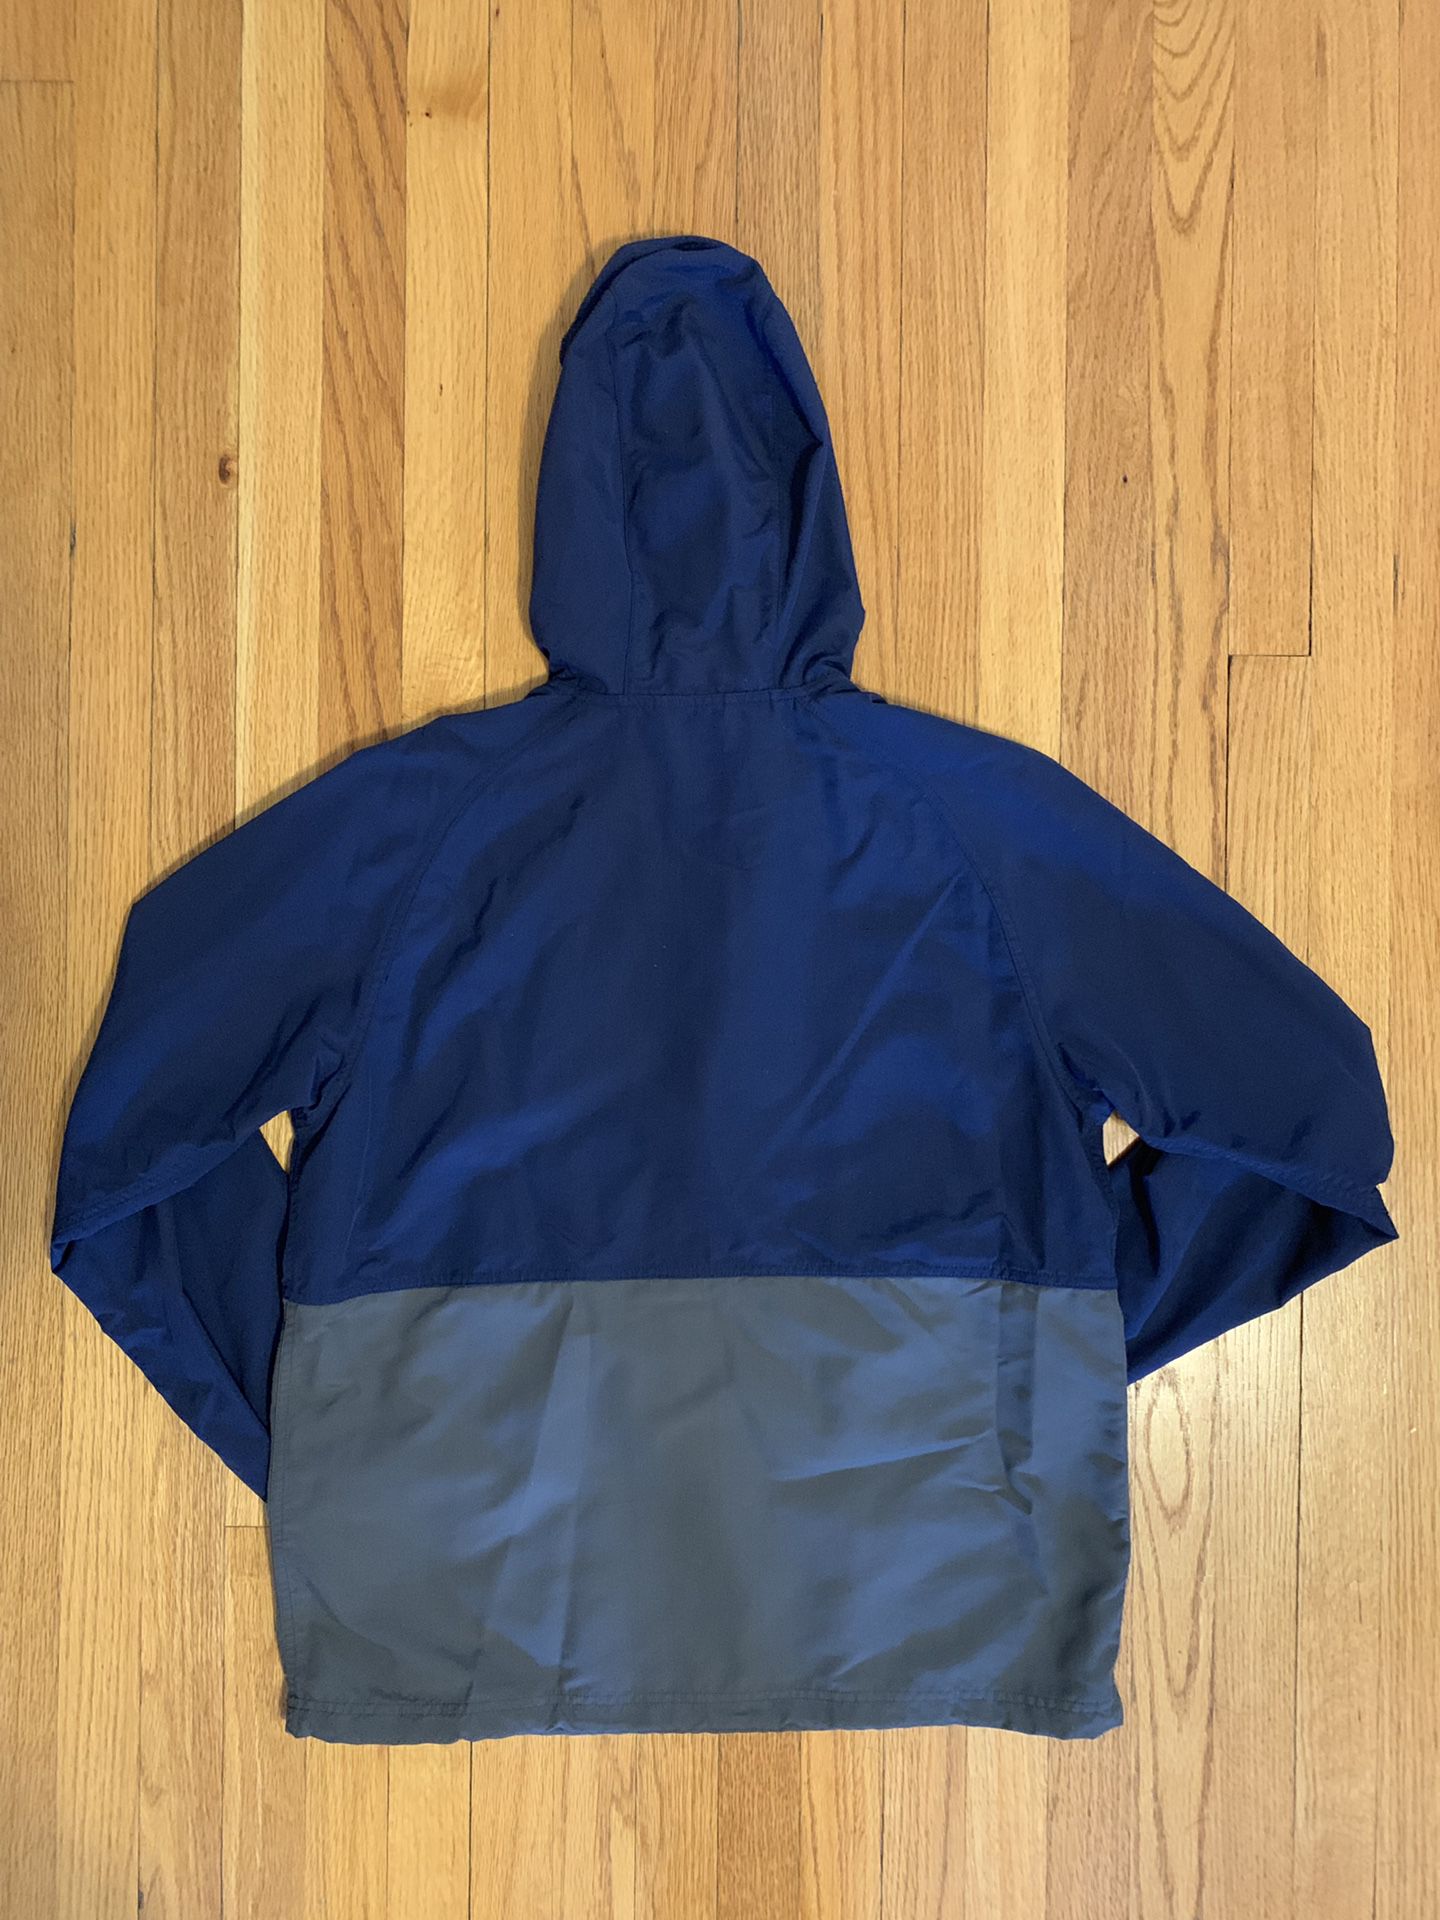 LL Bean Anorak rain jacket - medium for Sale in Park Ridge, IL - OfferUp